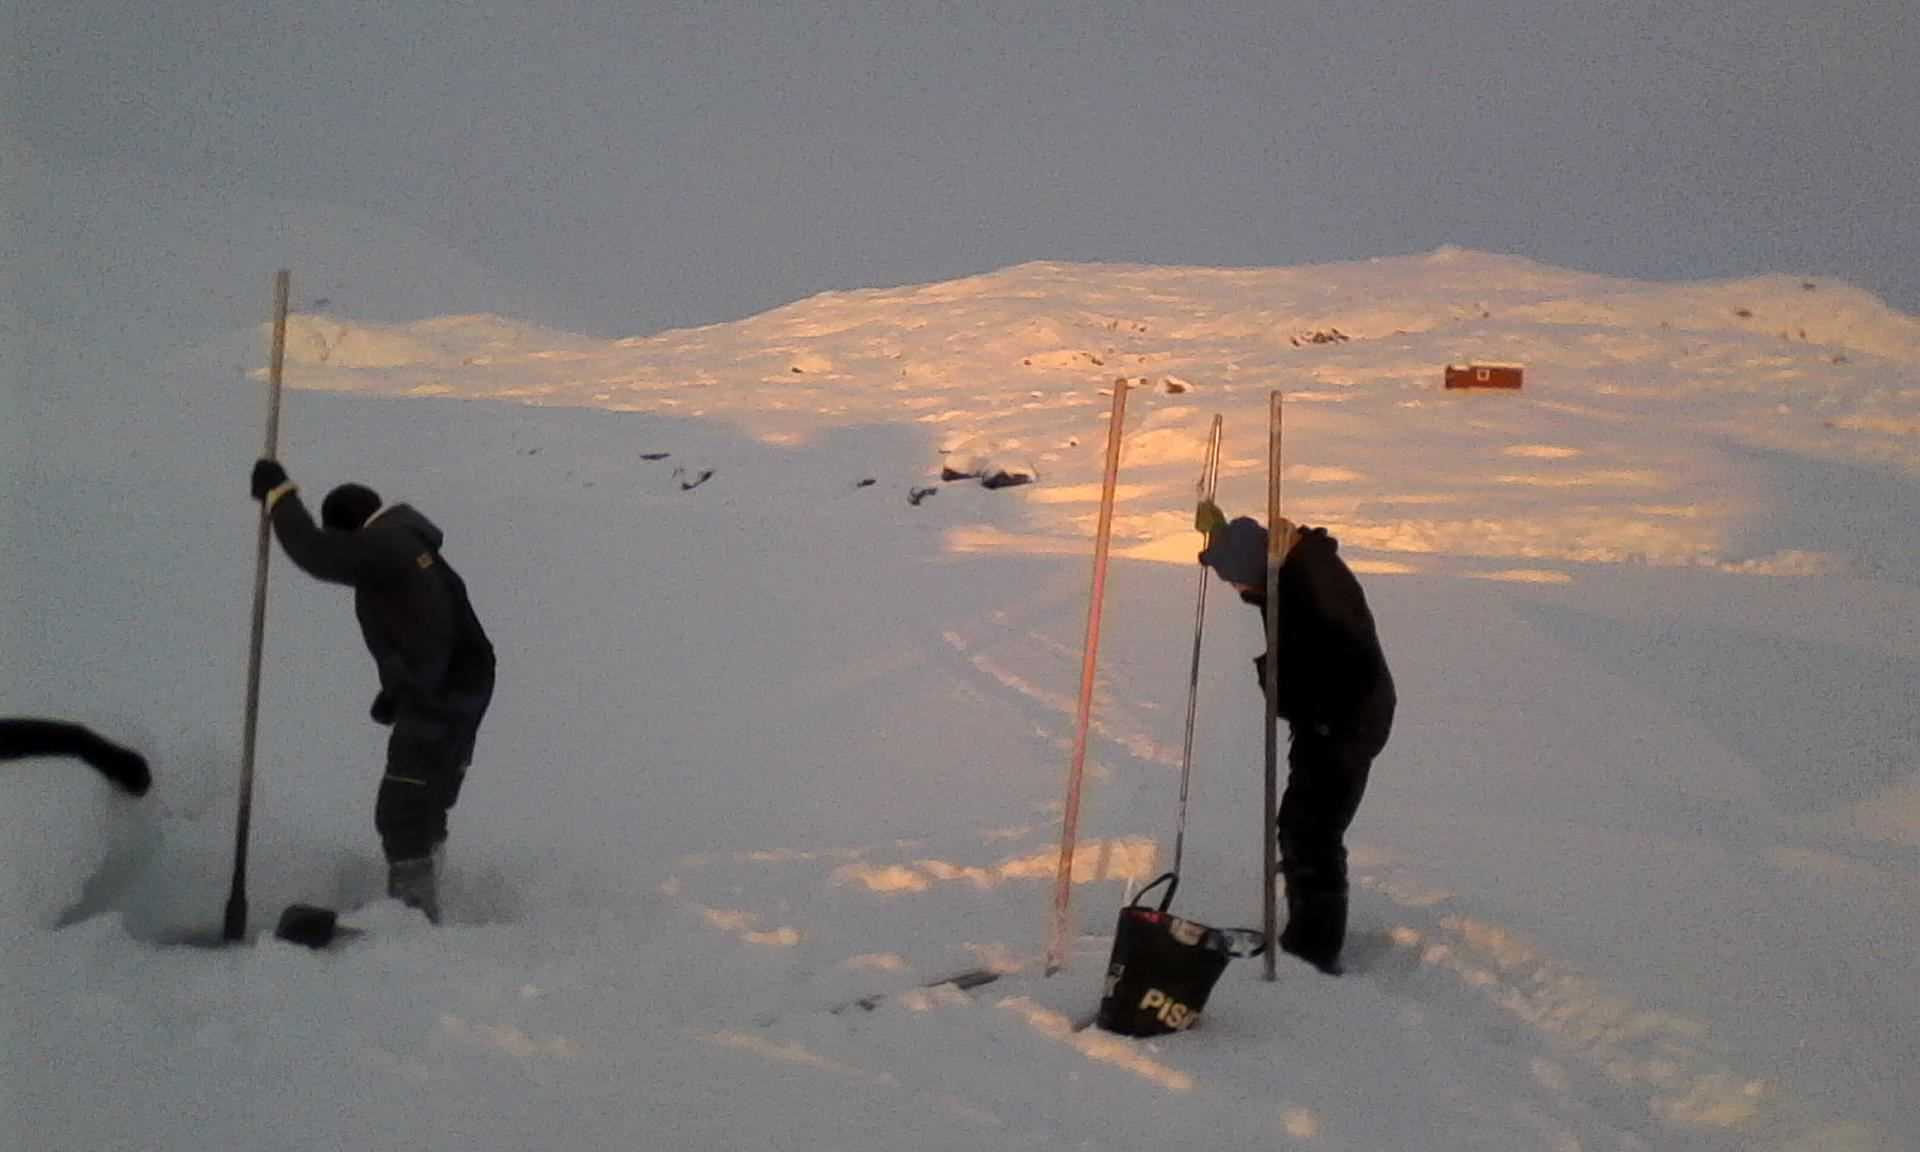 A fishing session in Nunatarsuaq.